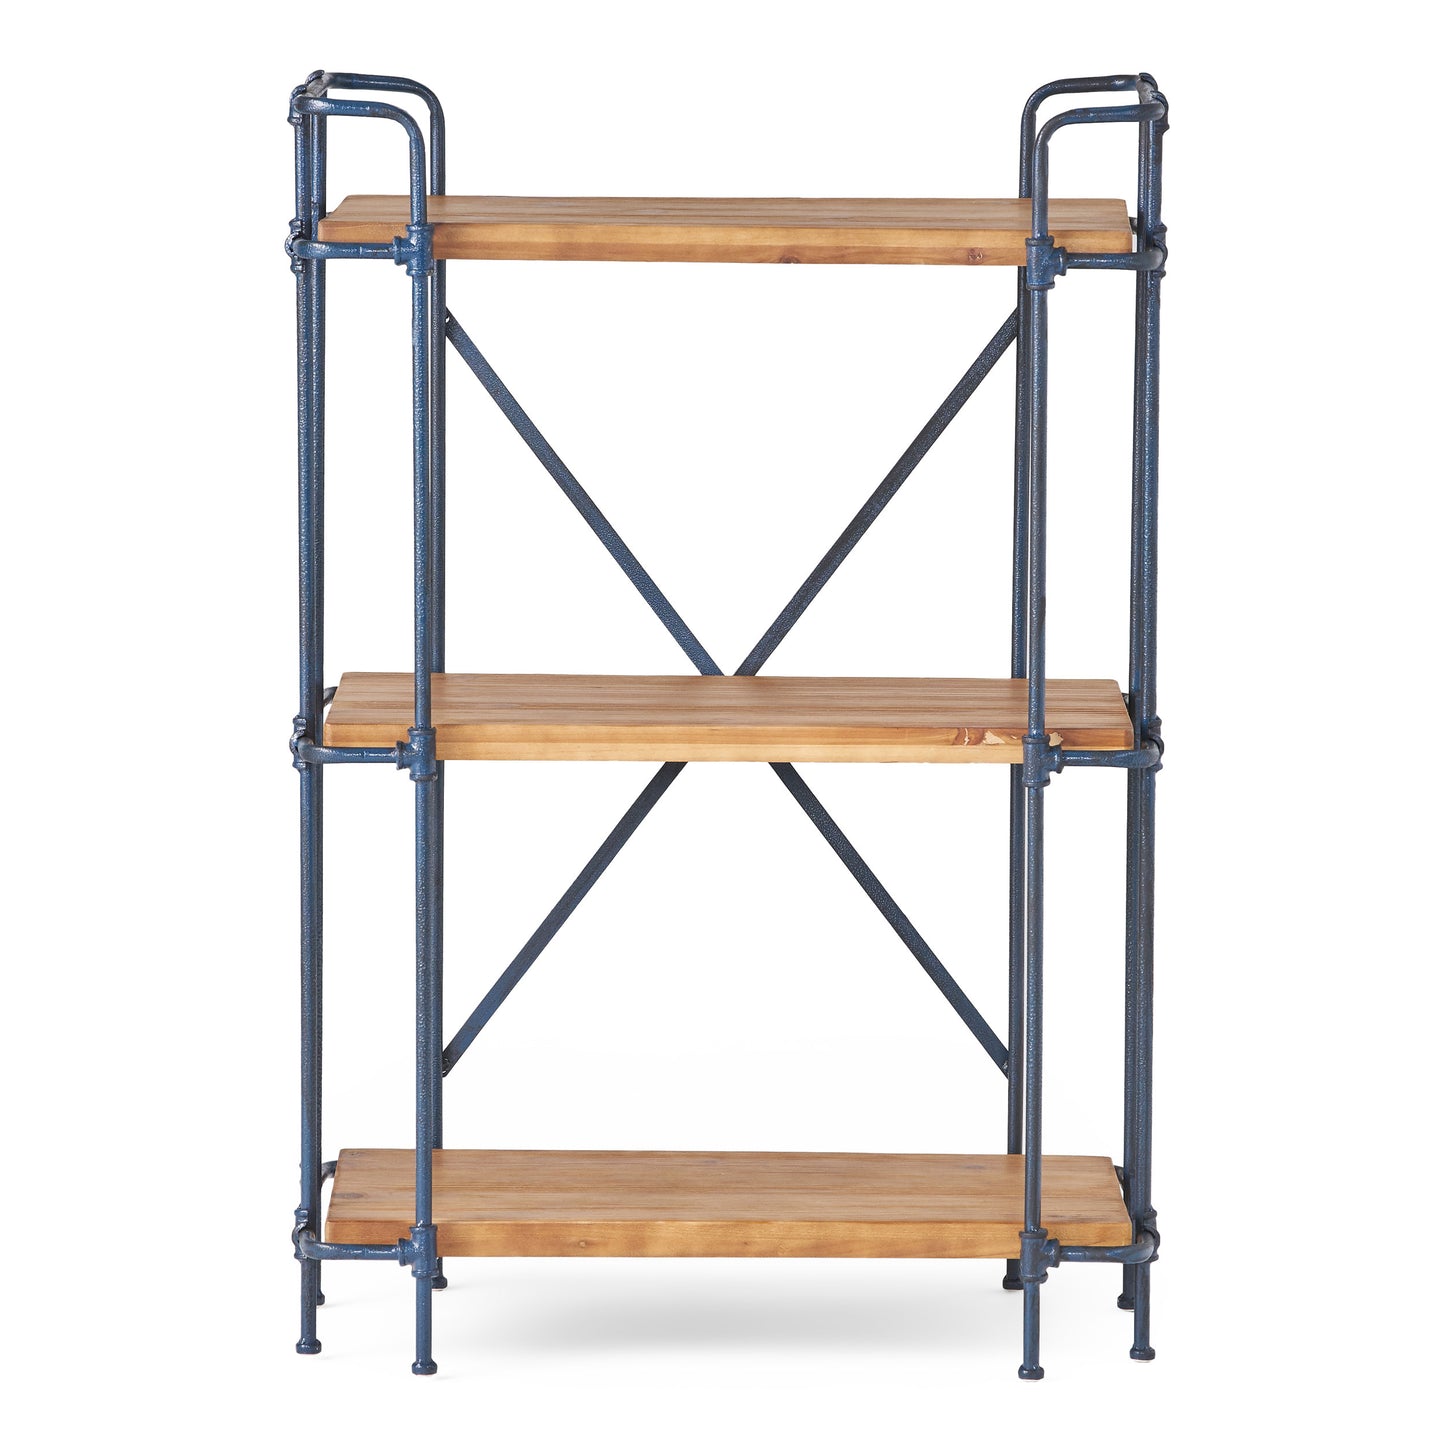 Mercia Industrial Pipe Design 3-Shelf Etagere Bookcase